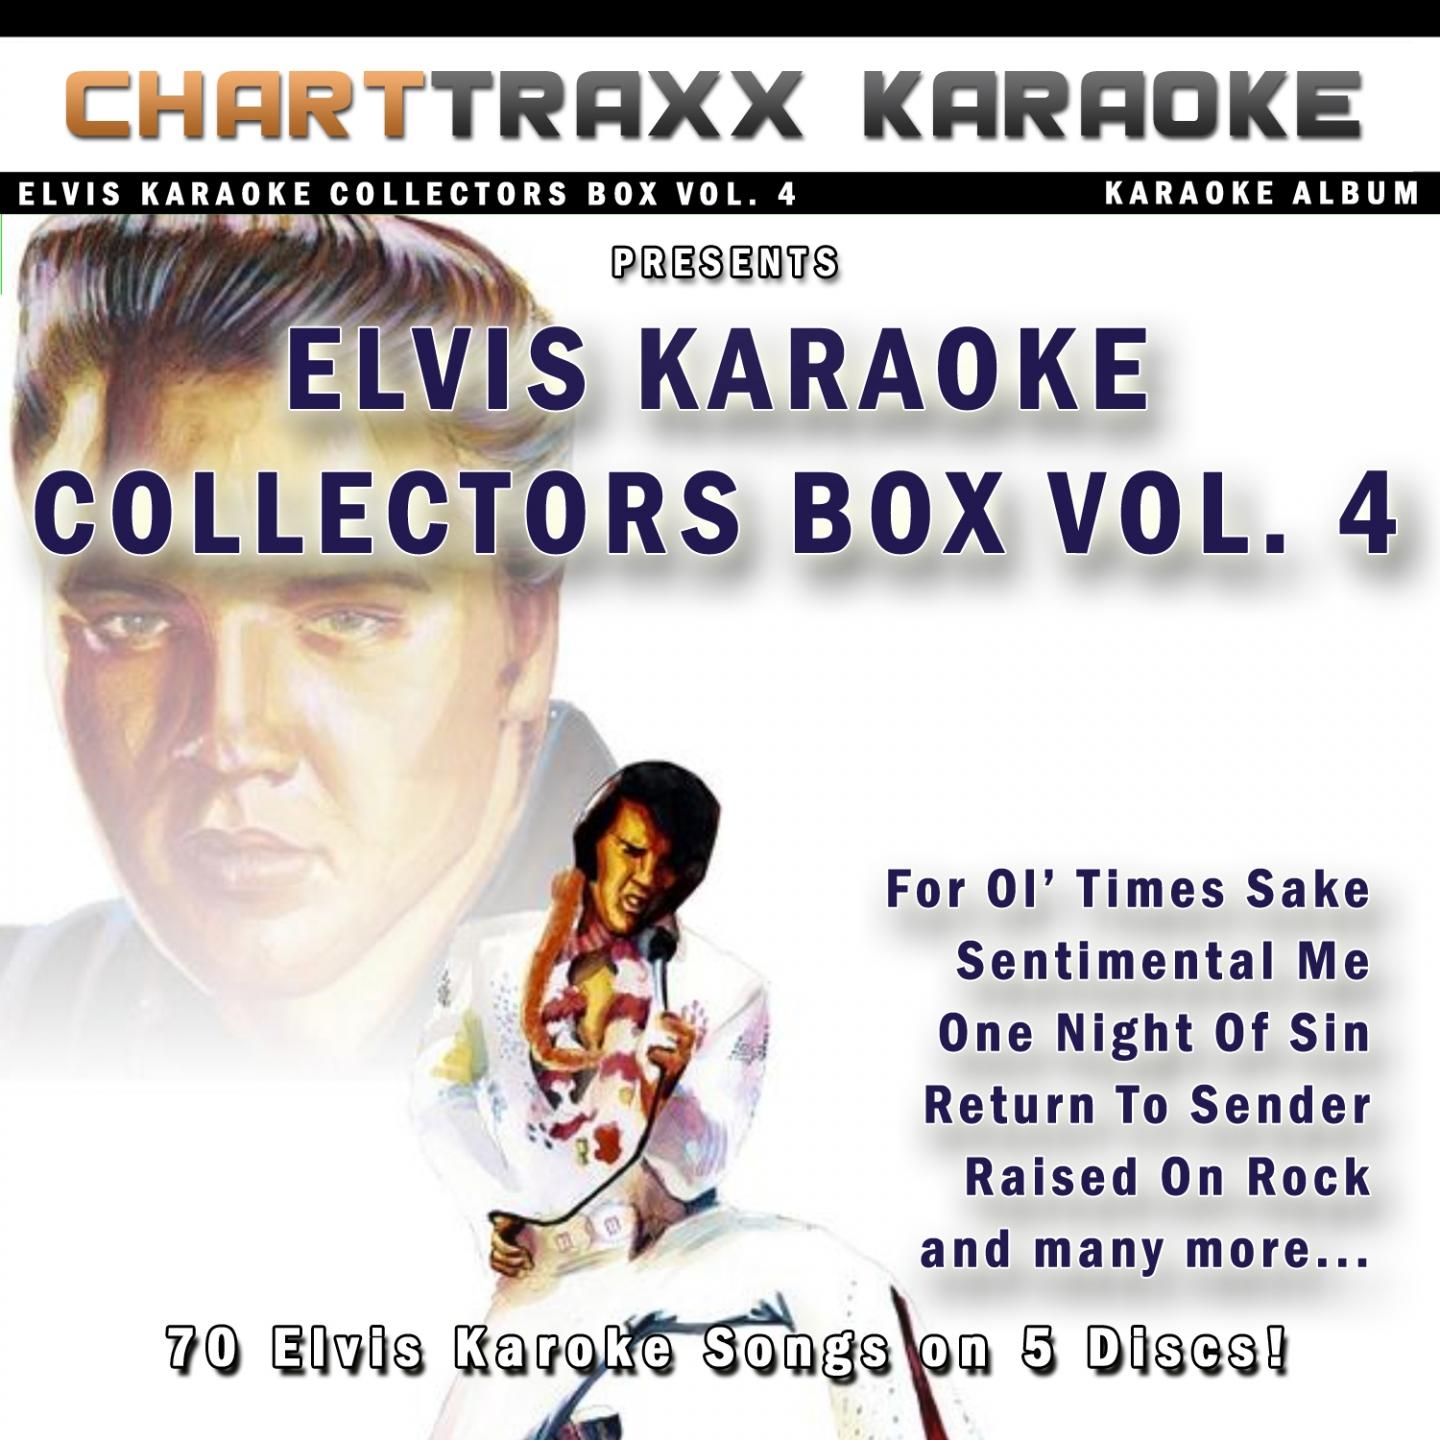 Only Believe (Karaoke Version in the style of Elvis Presley)